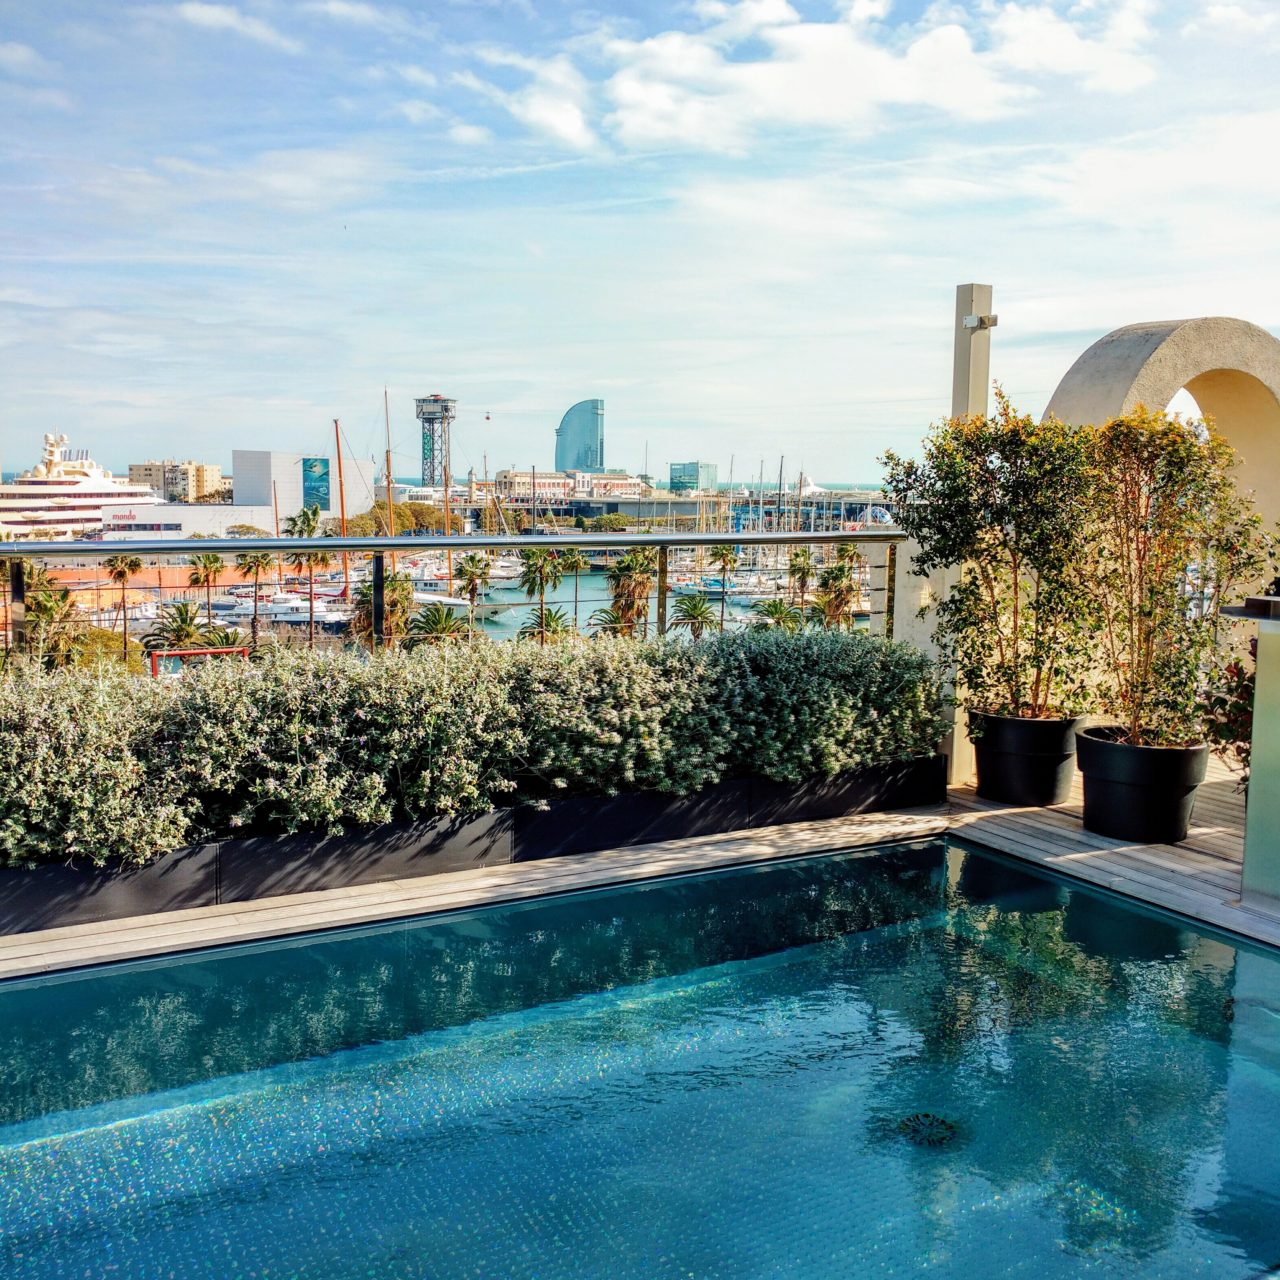 The Serras Hotel Barcelona Rooftop Pool